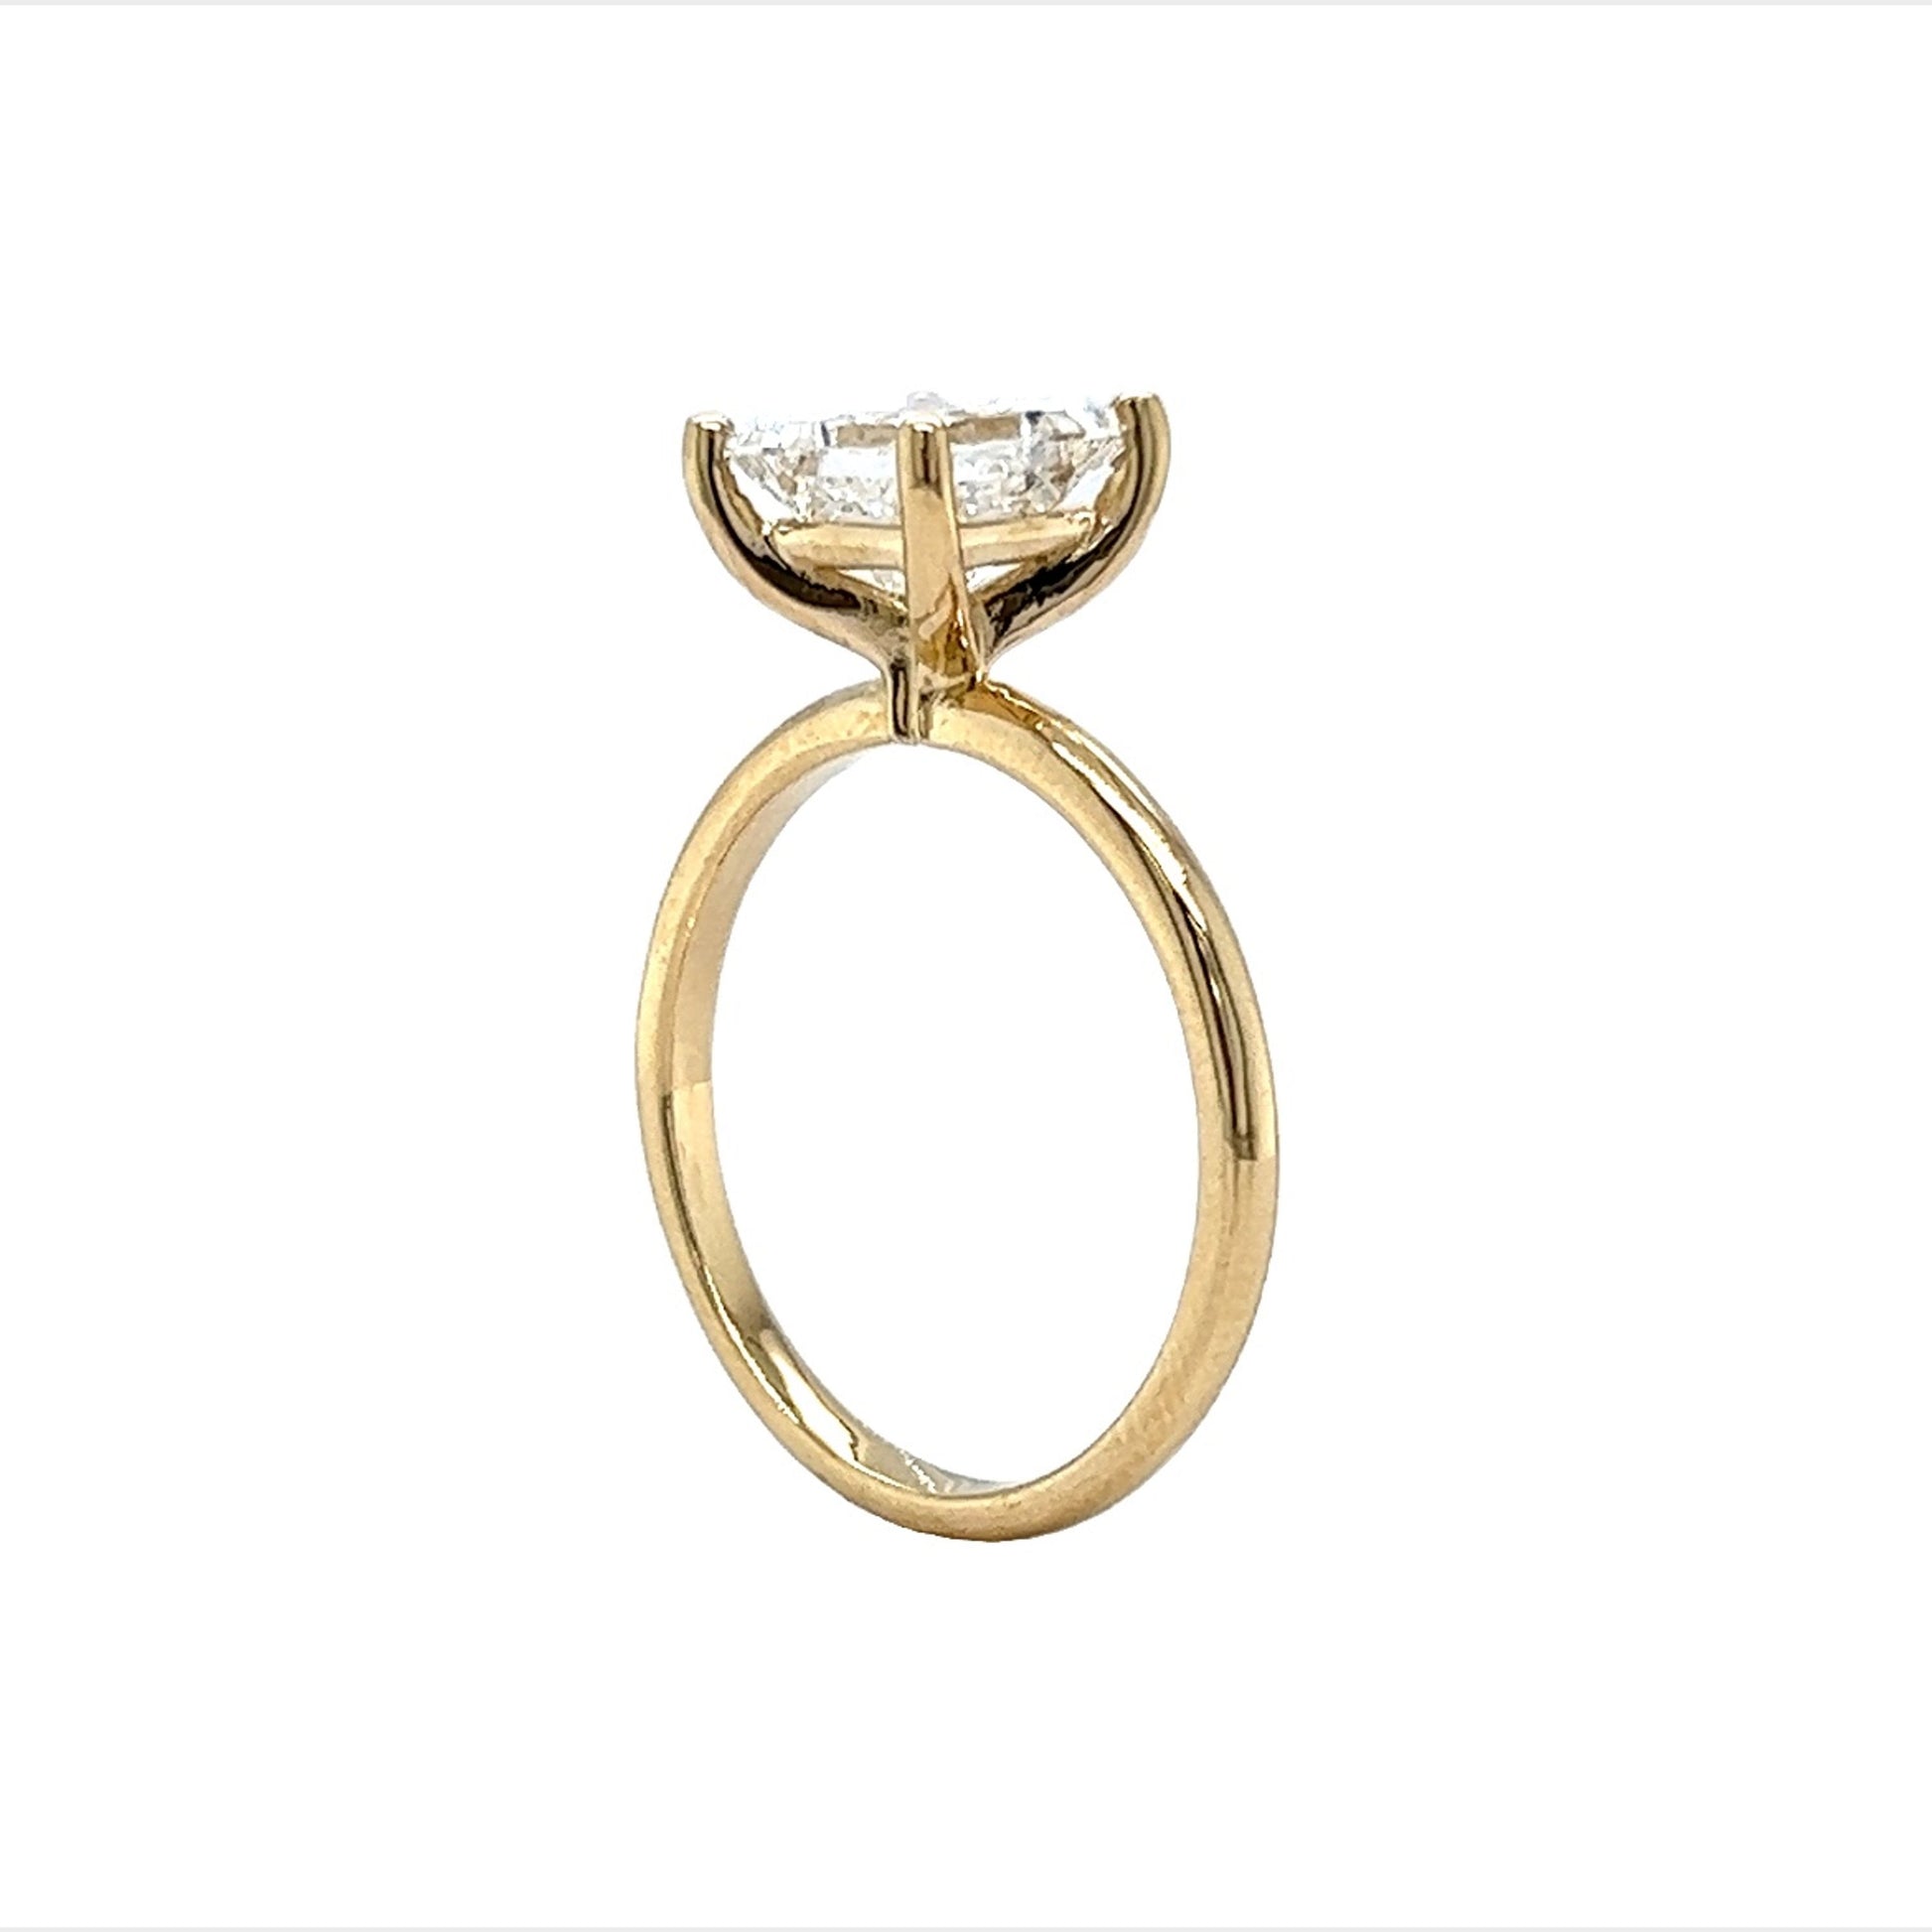 2.01 Princess Cut Diamond Engagement Ring in 14k Yellow Gold